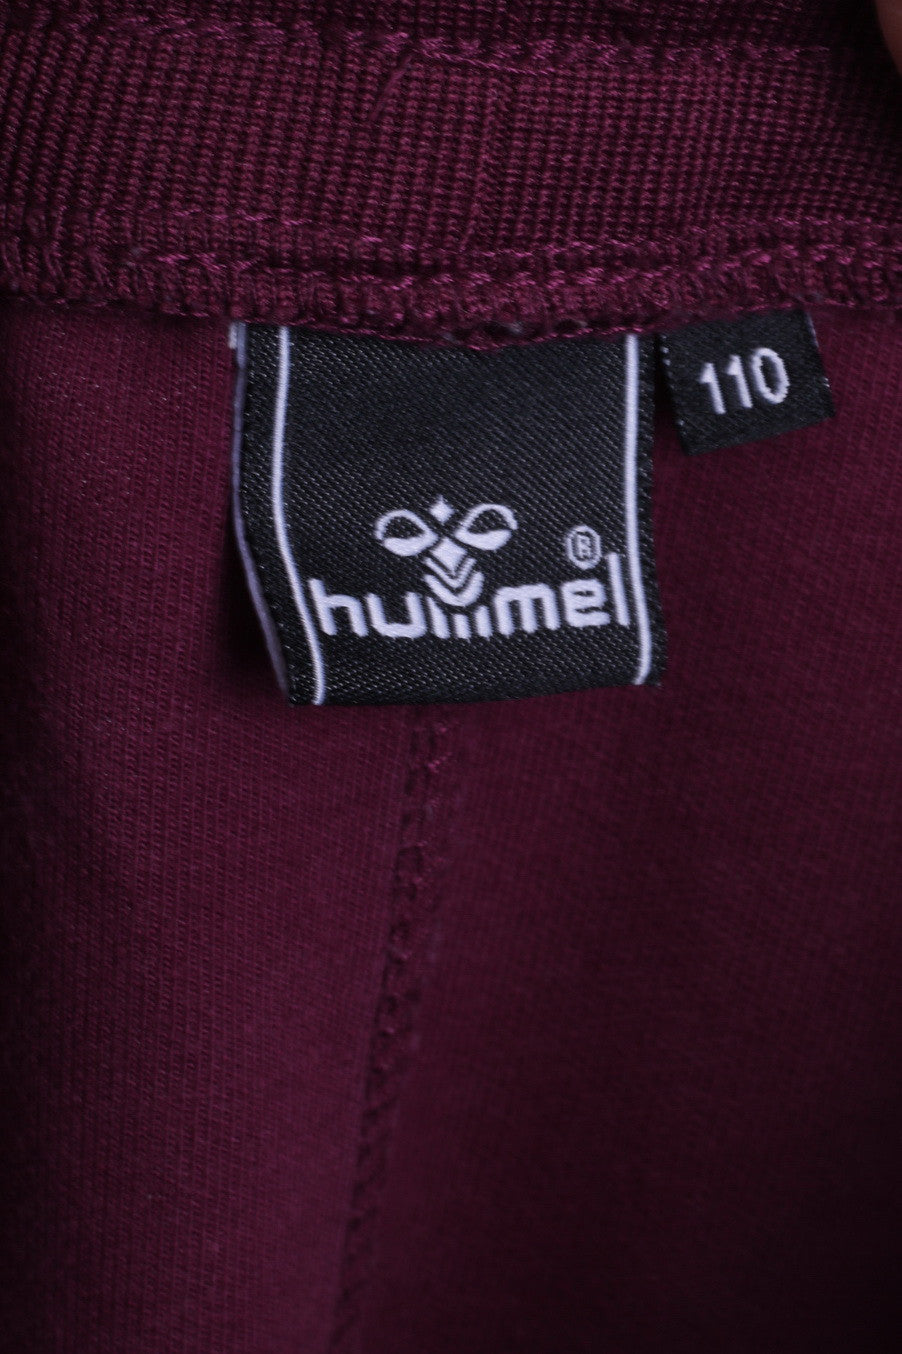 Hummel Grils 110 Trousers Sweatpants Purple Sport